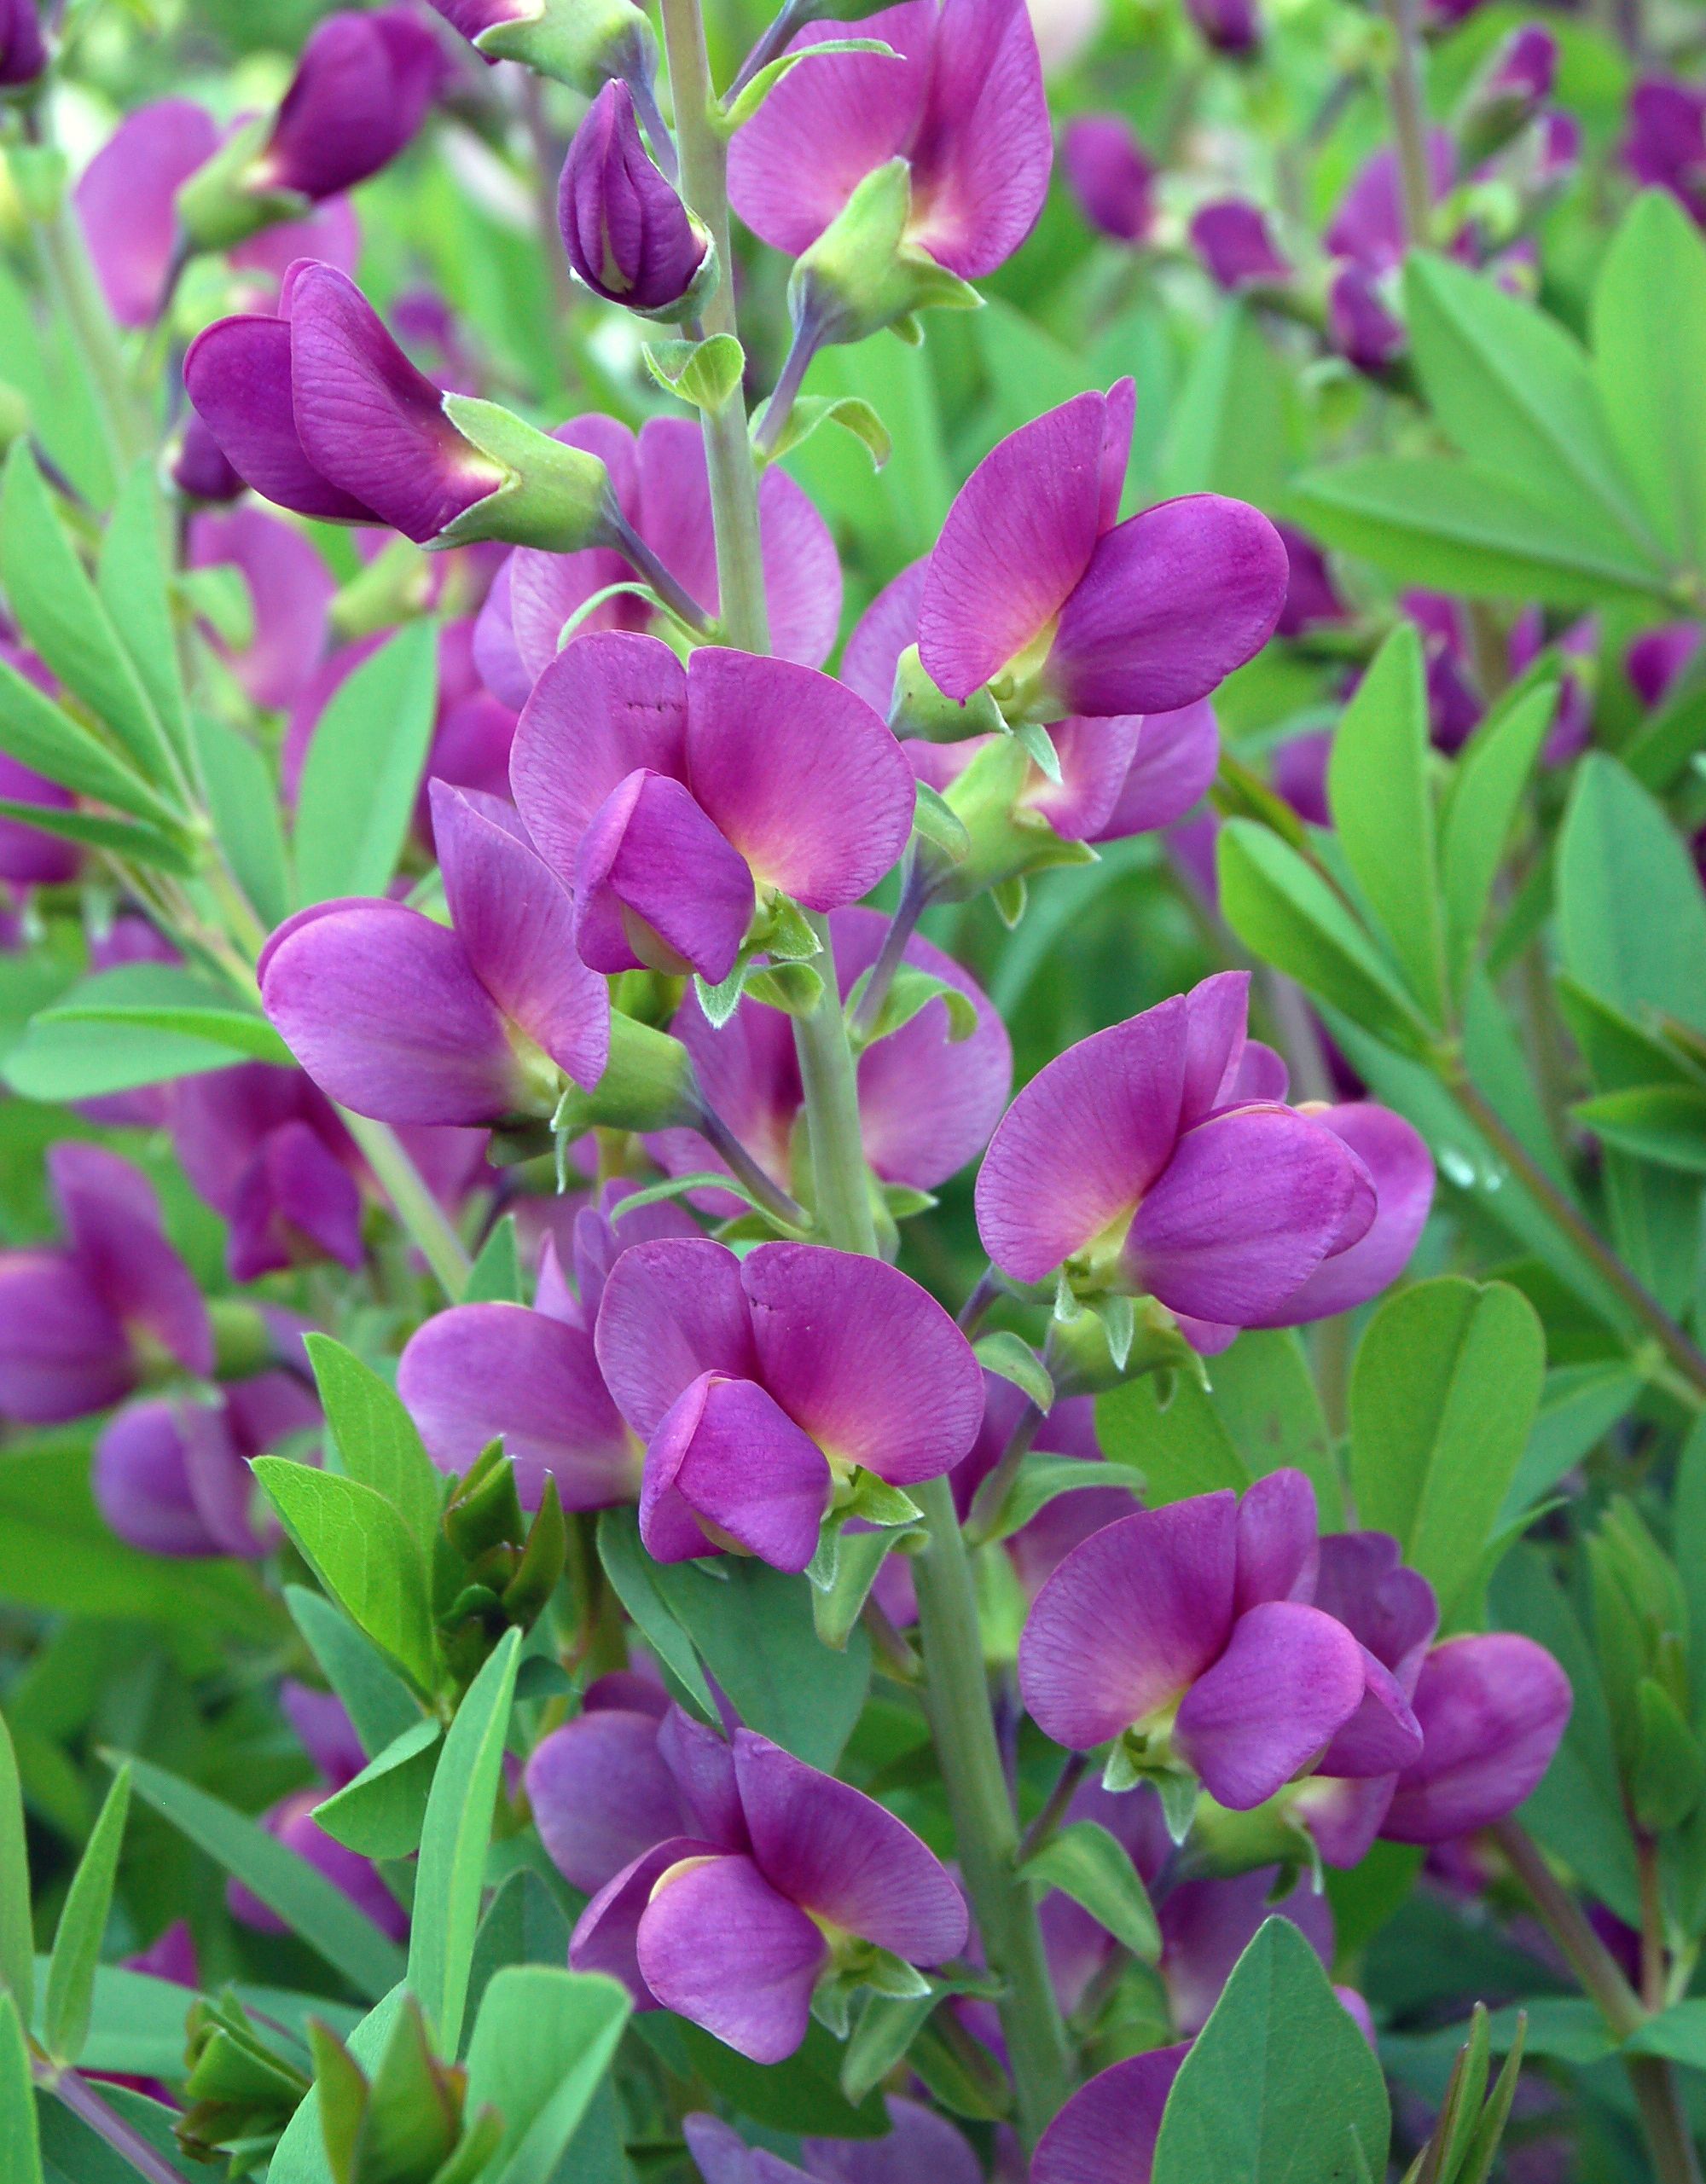 images/plants/baptisia/bap-lavendar-rose/bap-lavendar-rose-0009.jpg